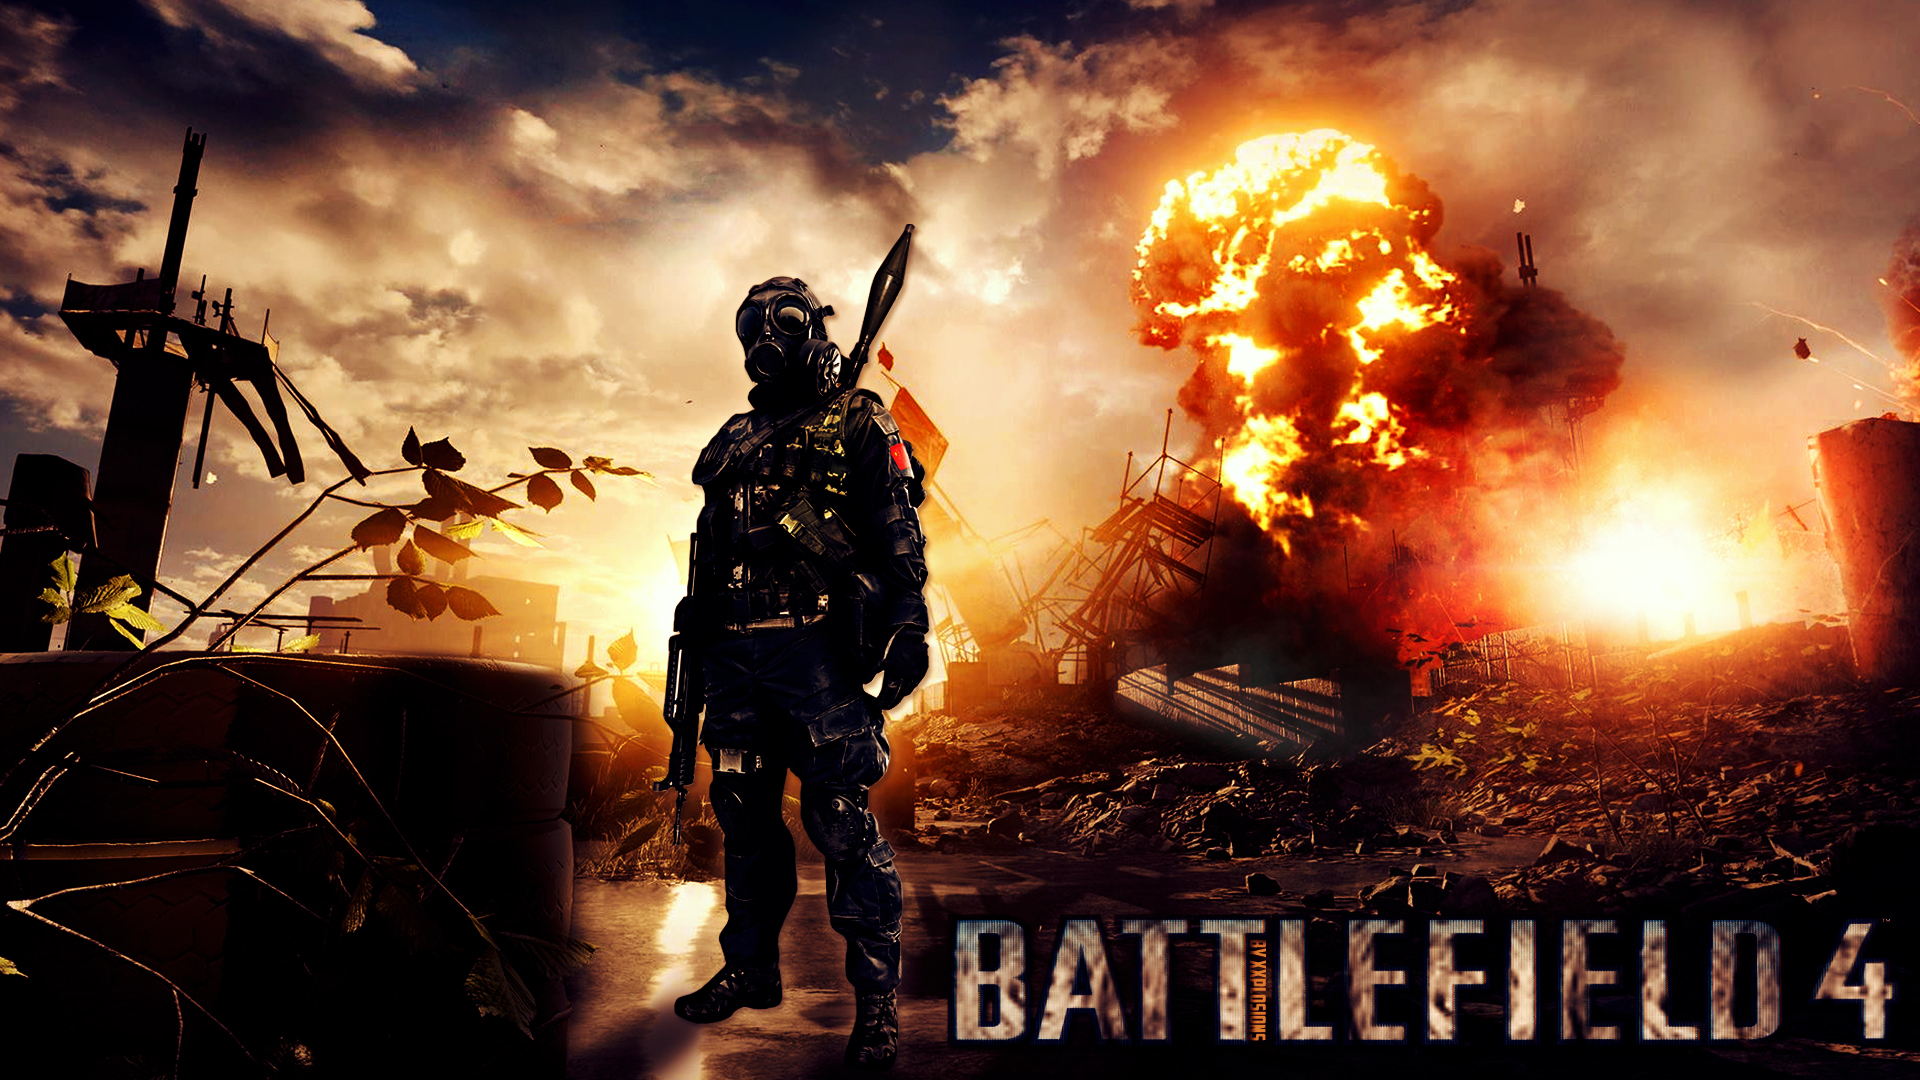 44+] Battlefield 4 Wallpaper - WallpaperSafari